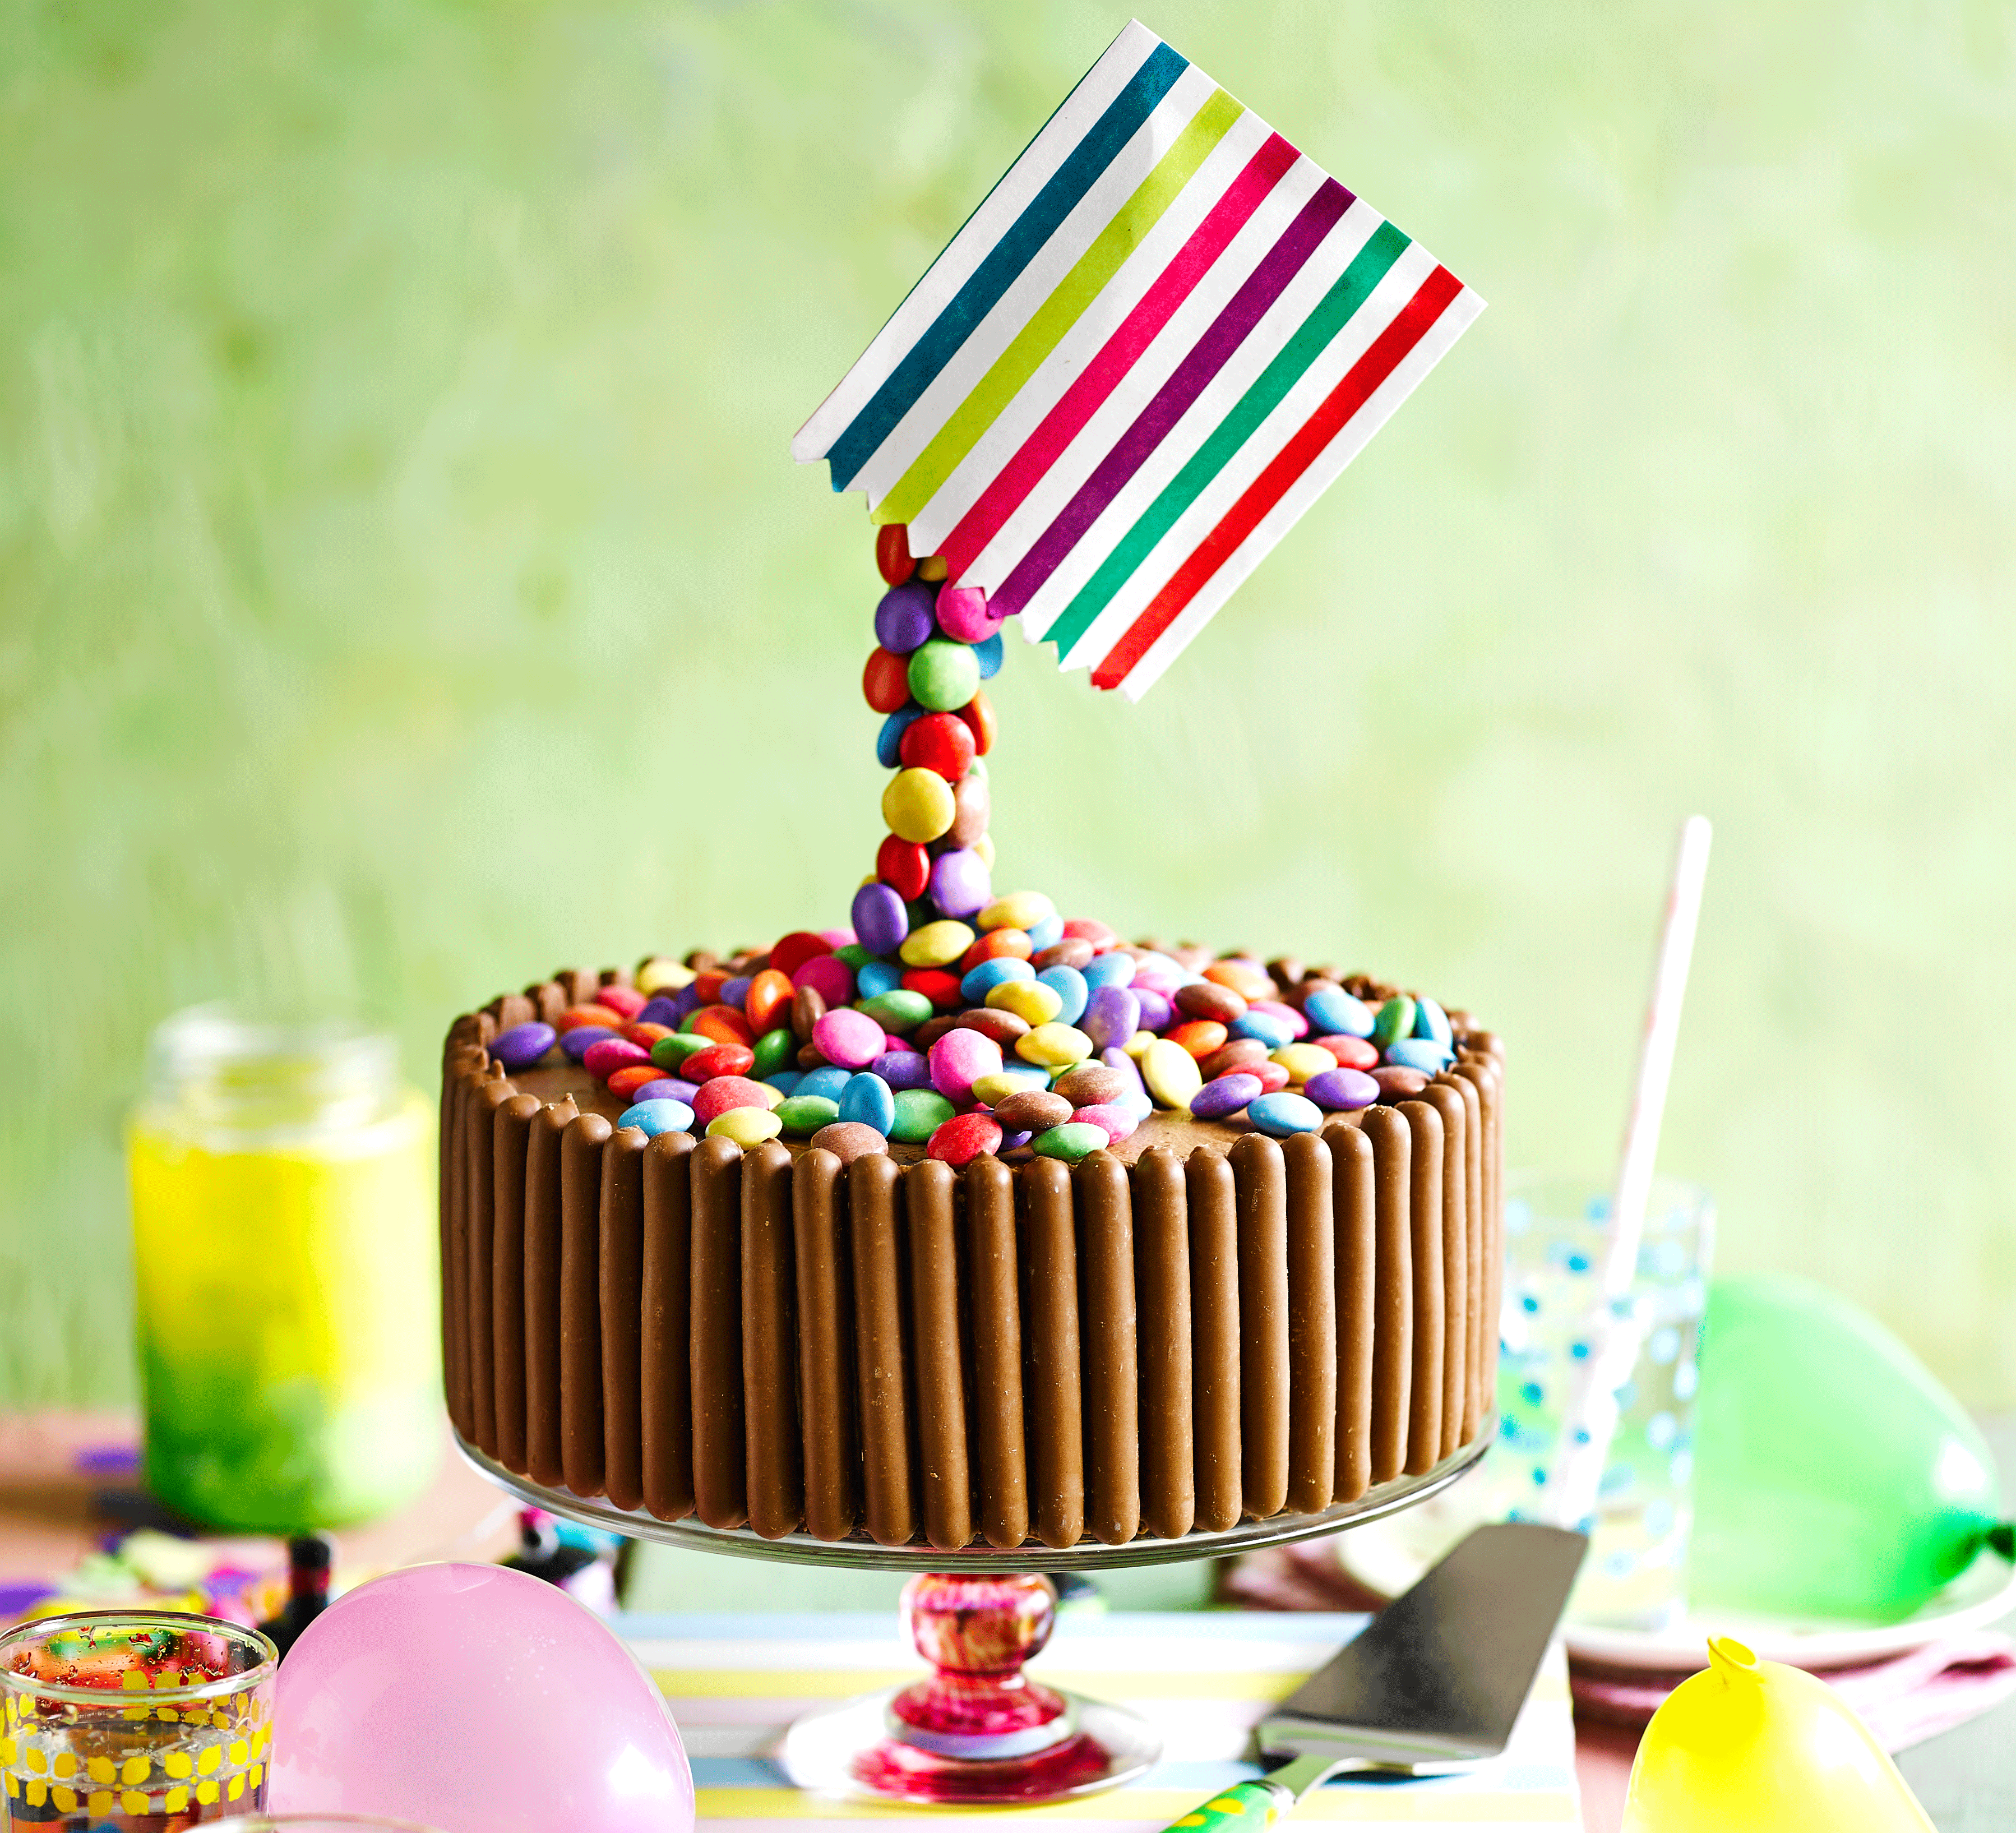 Gravity-defying sweetie cake recipe | BBC Good Food